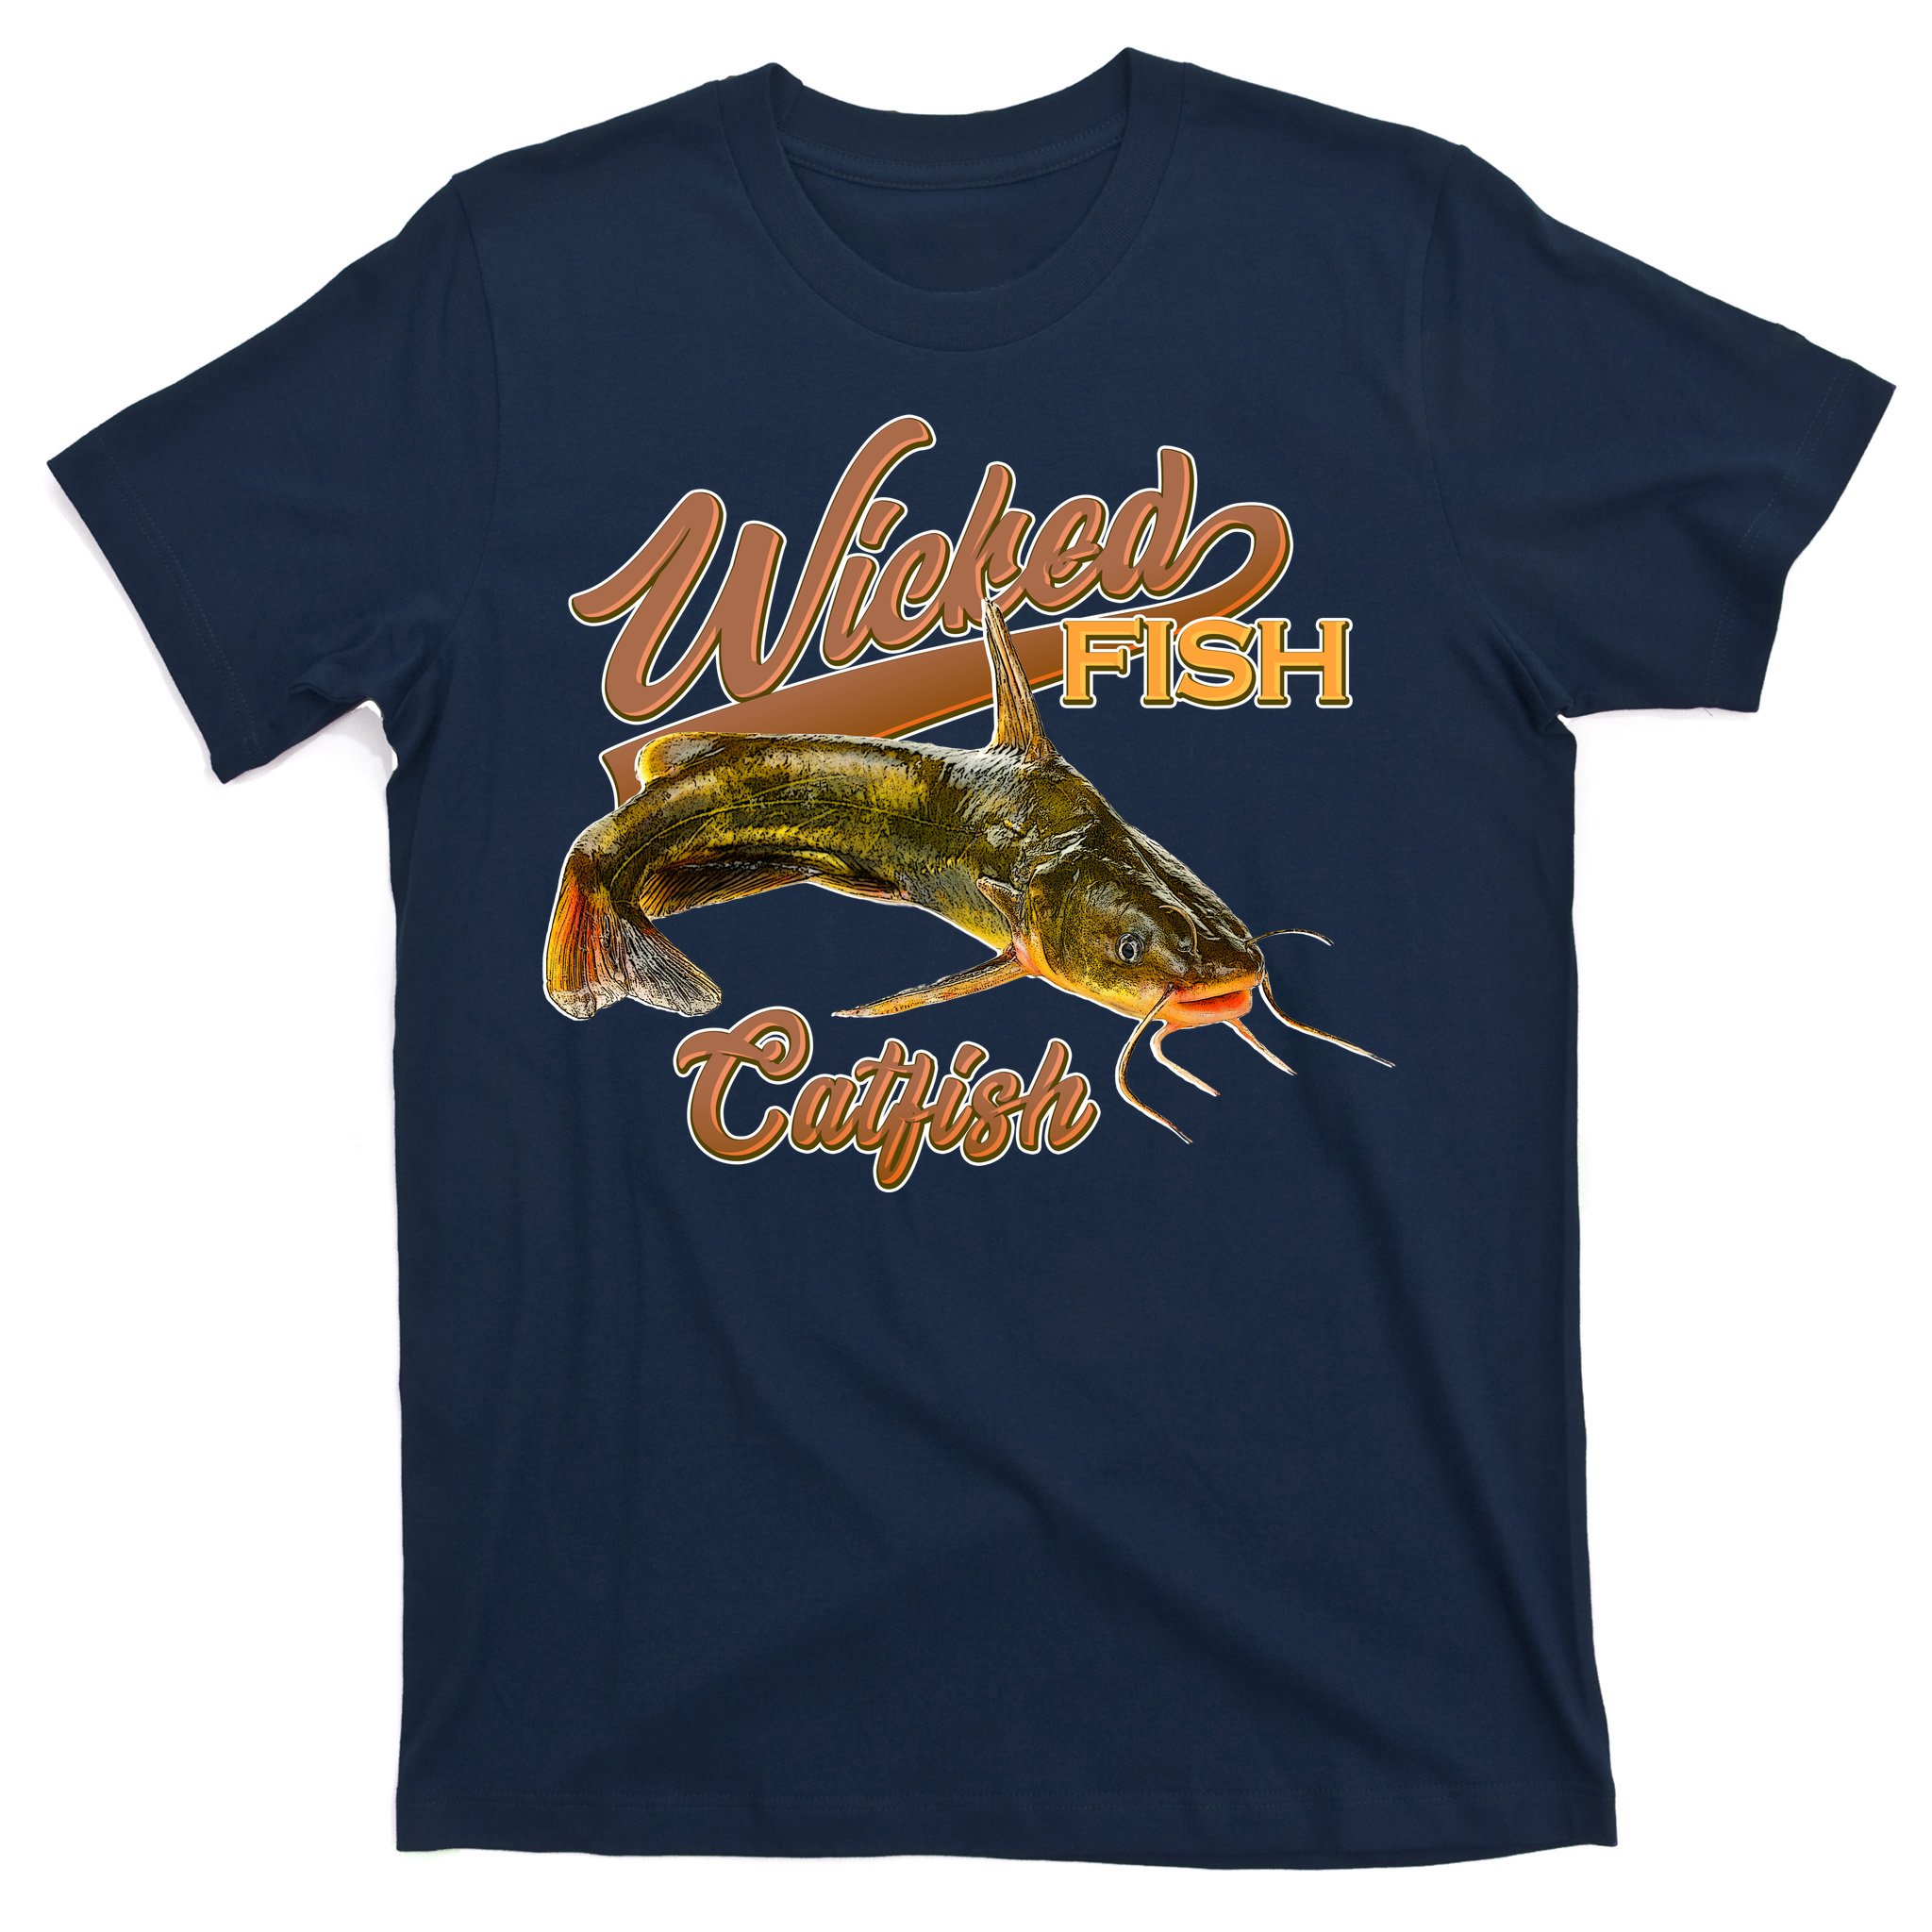 https://images3.teeshirtpalace.com/images/productImages/wicked-fish-catfish-fishing--navy-at-garment.jpg